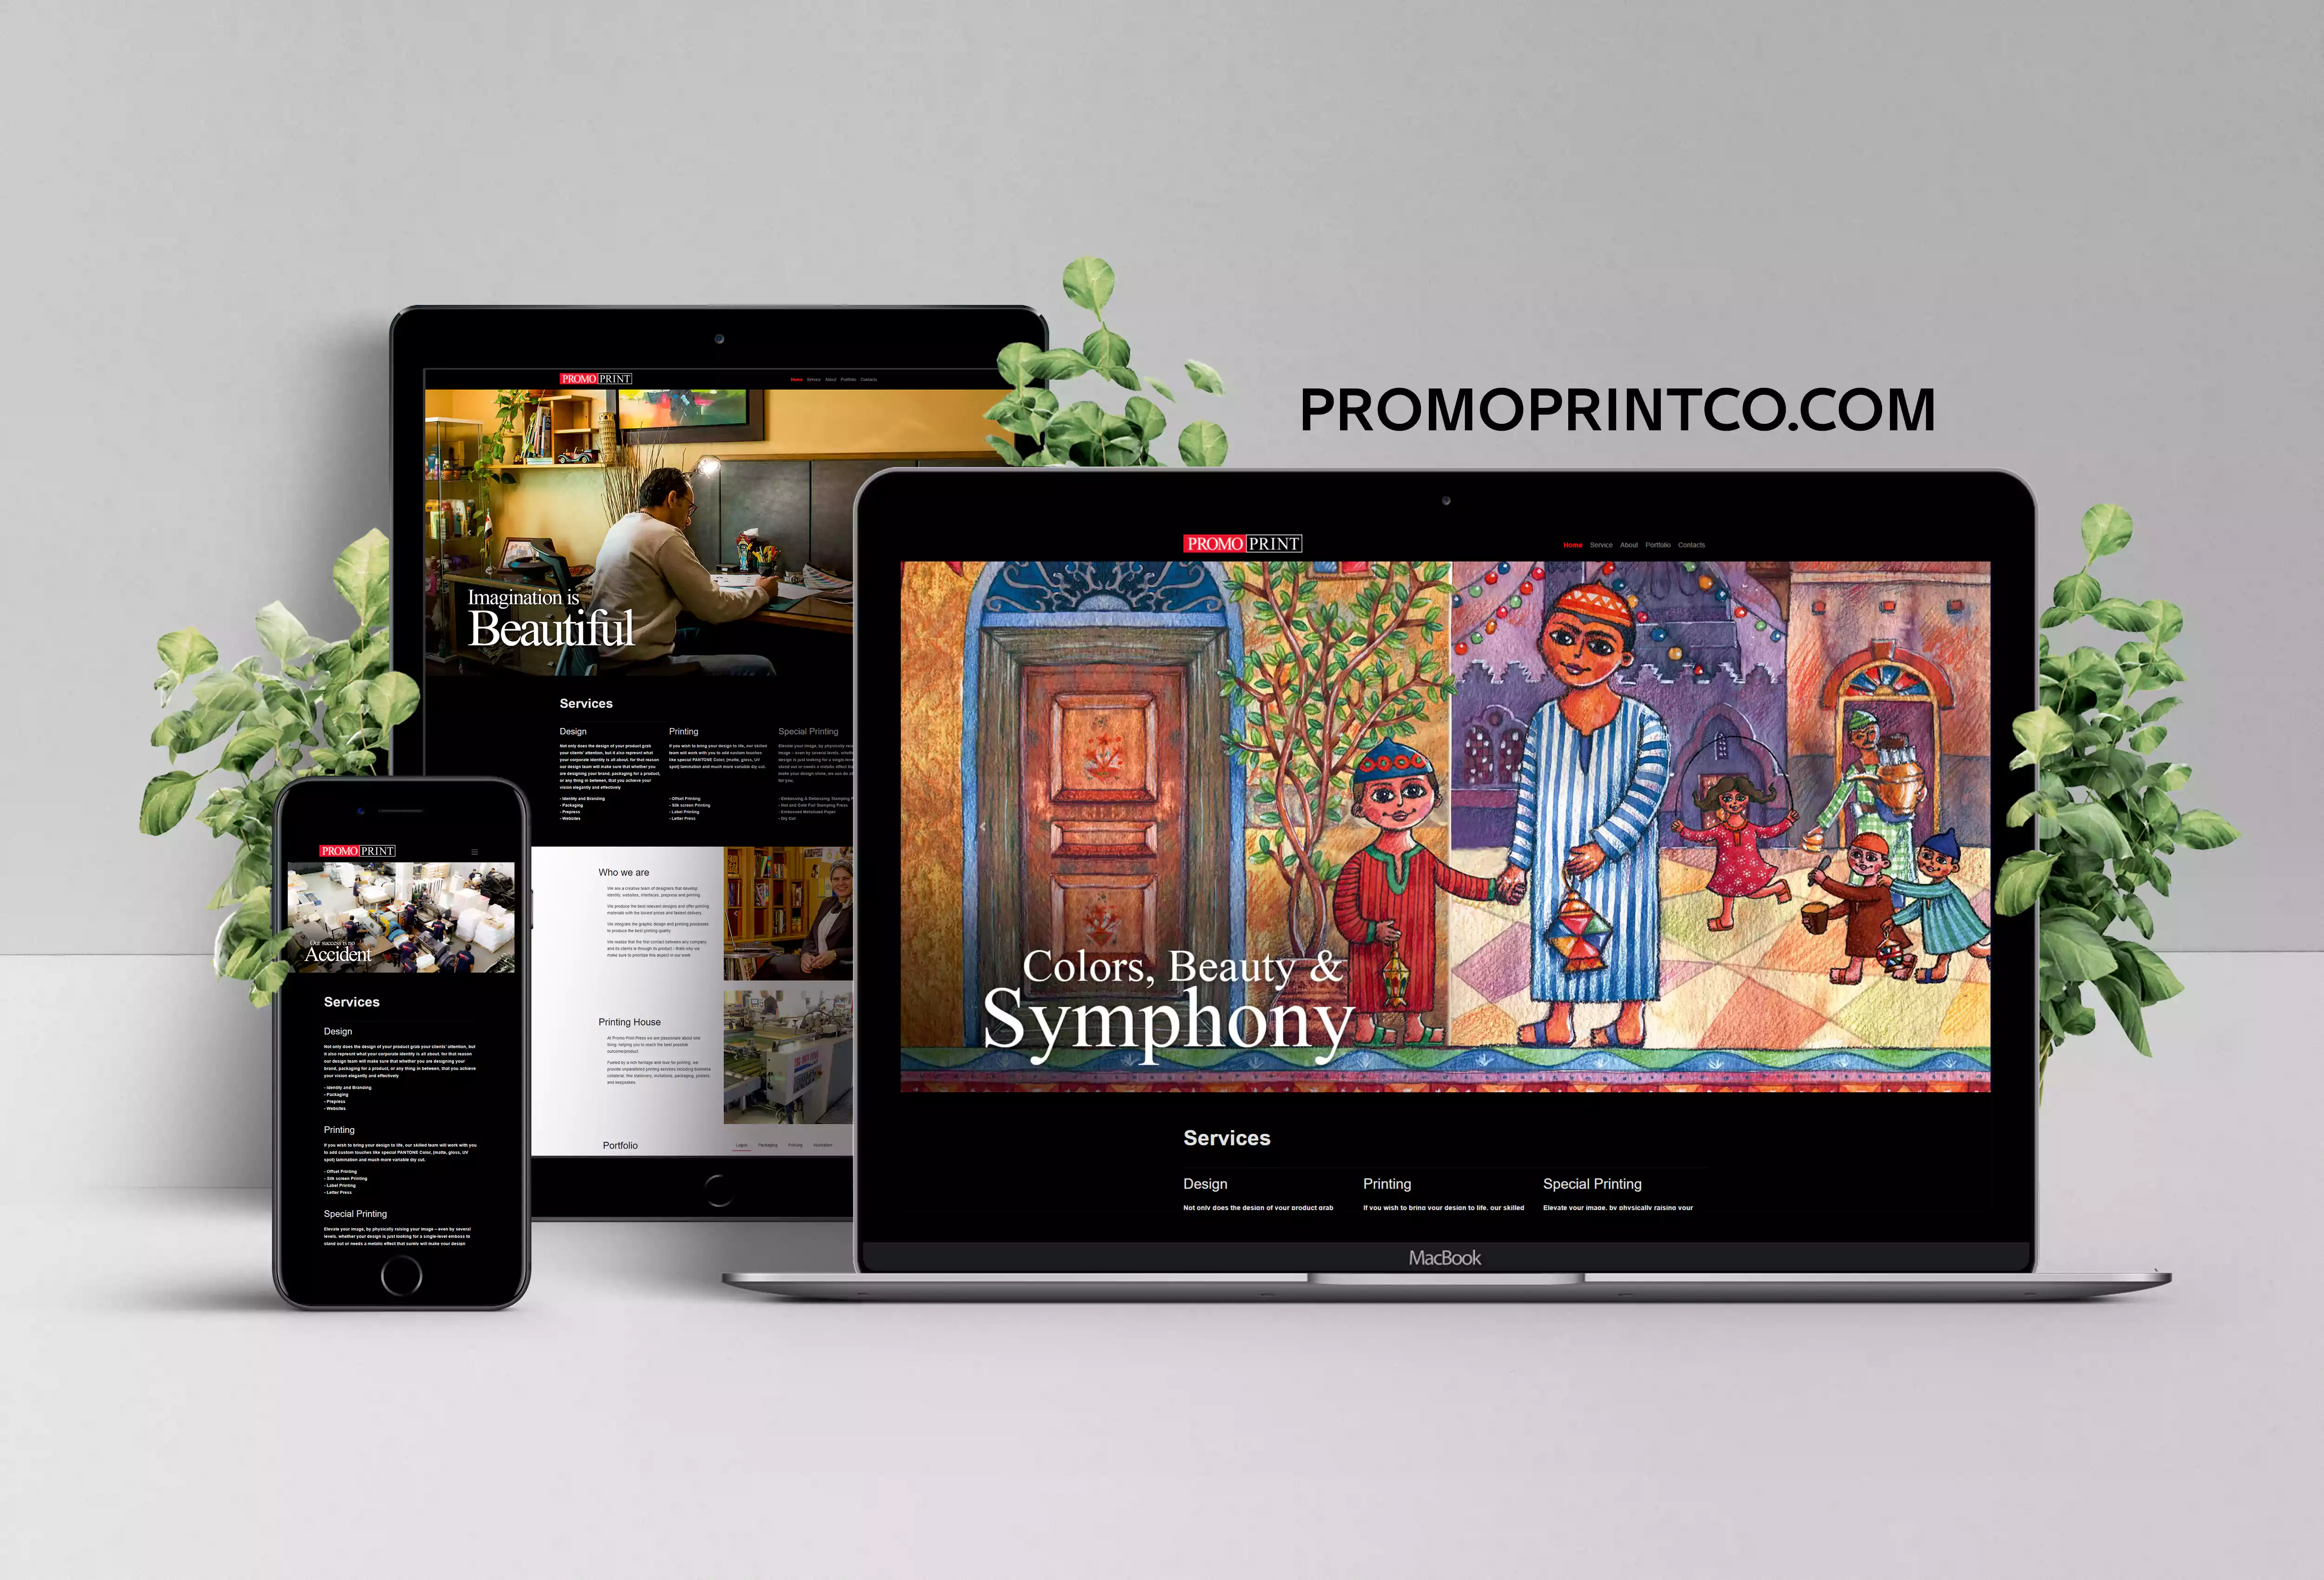 Promo Print website design and development